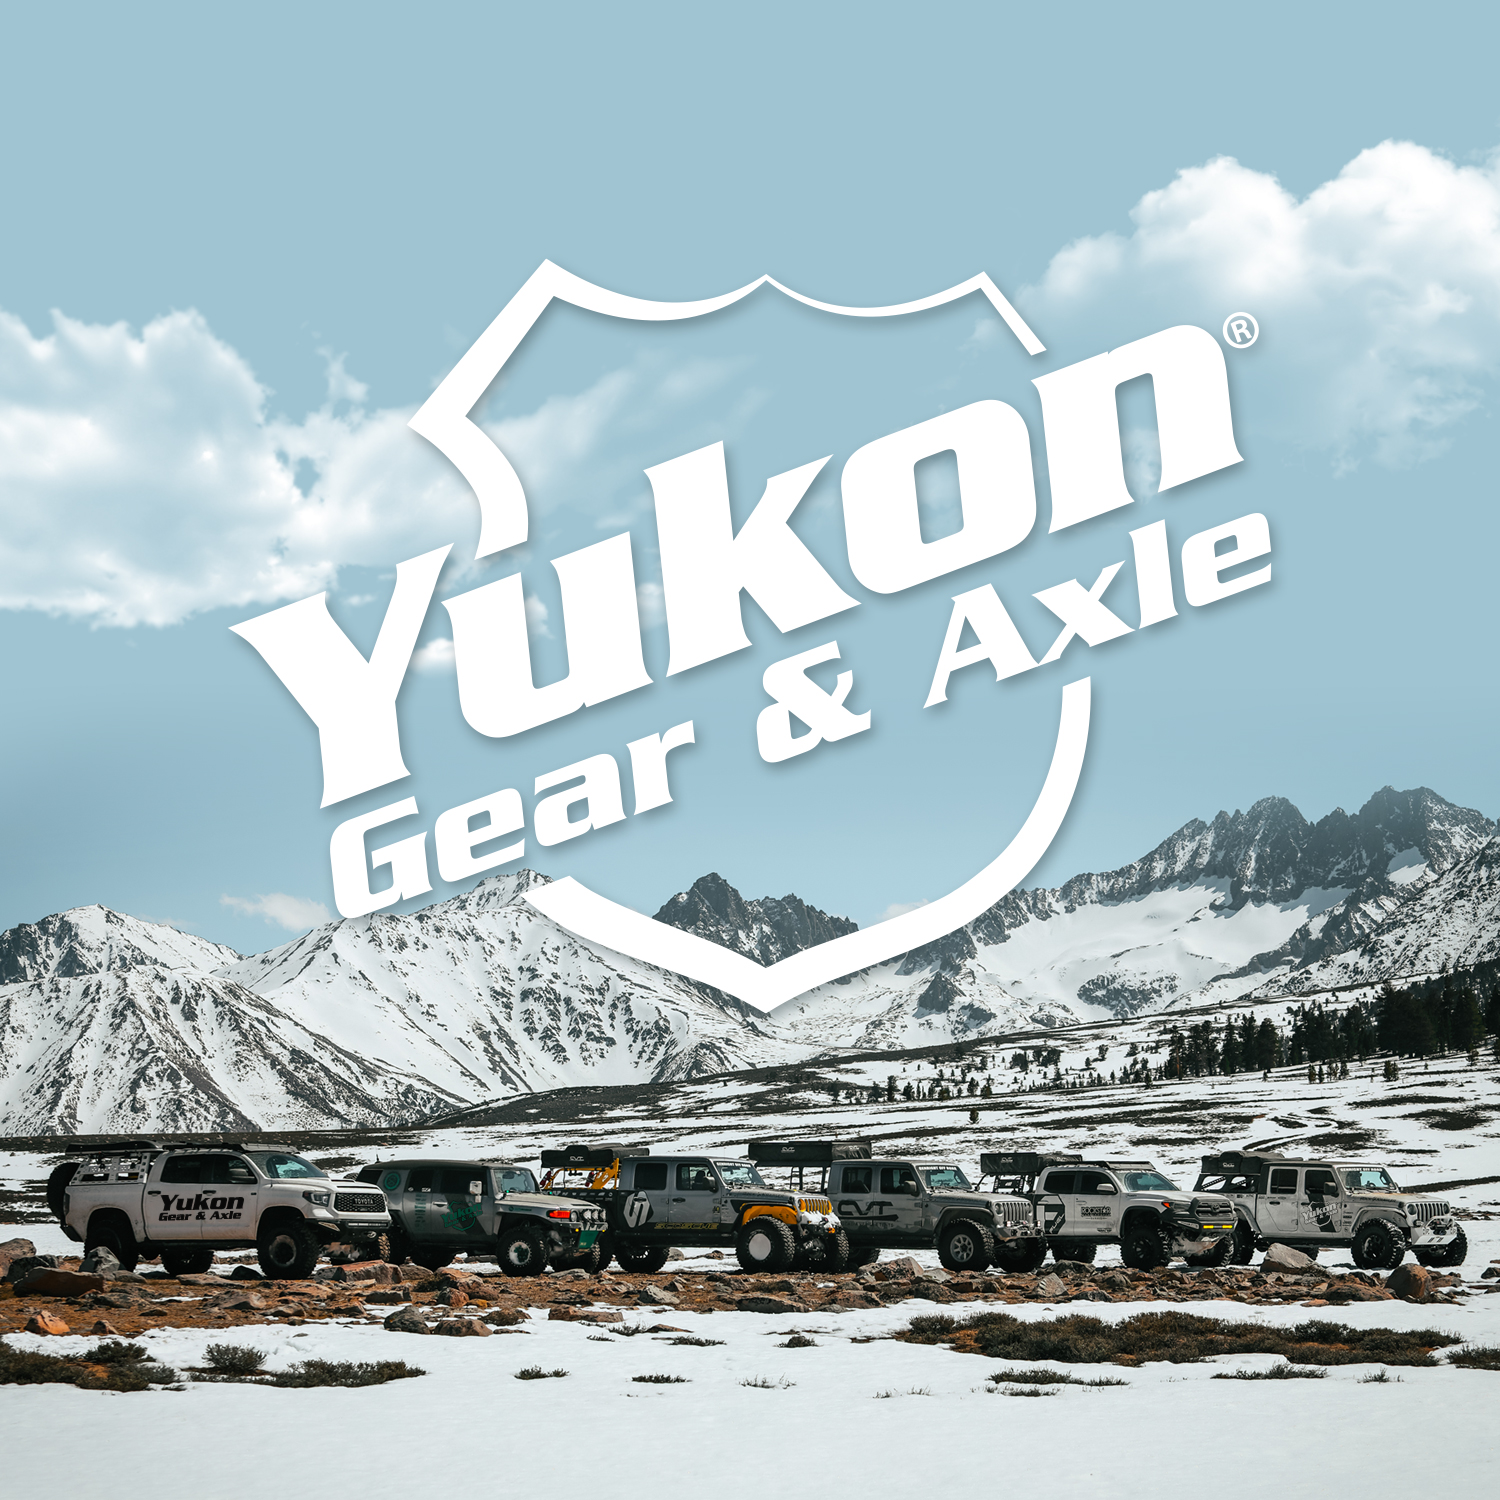 Yukon Standard Rotation Dana 60 Chrome Differential Cover 